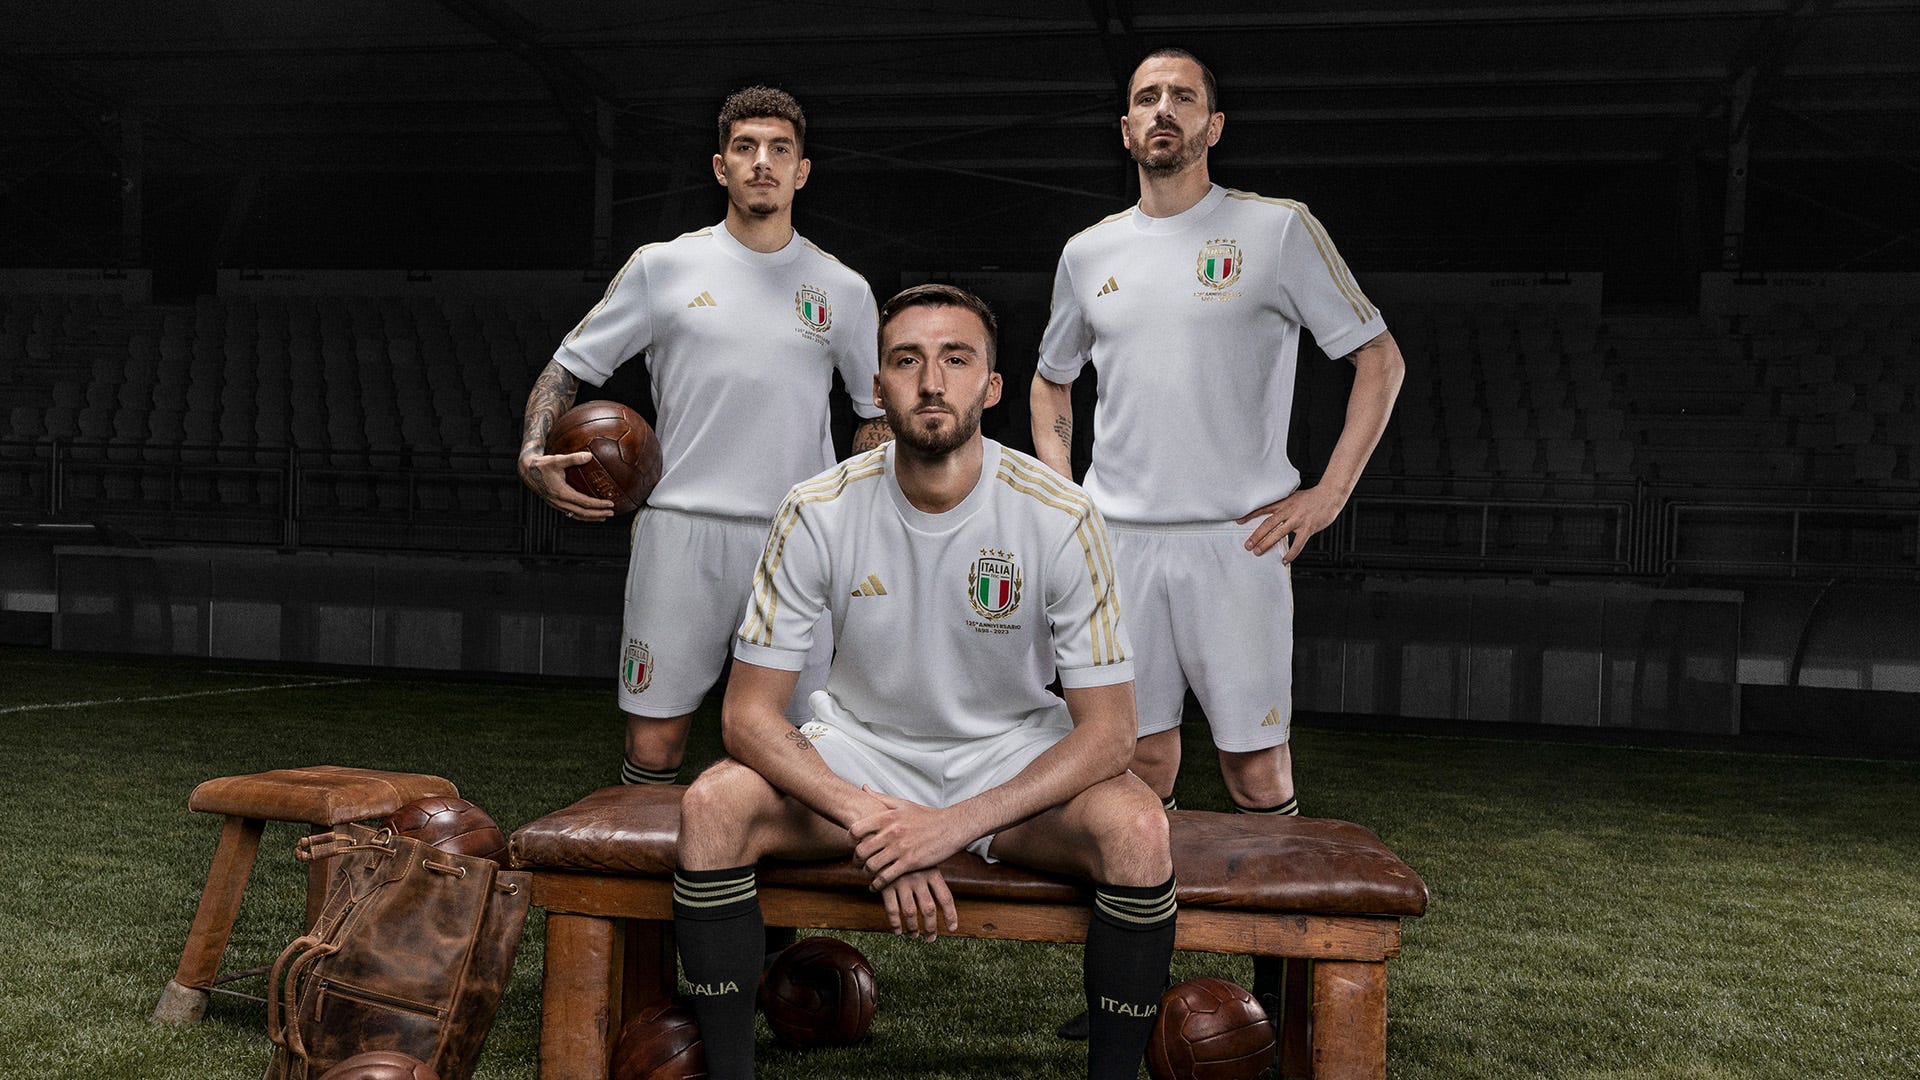 Italy Soccer Jerseys, Italy National Team Jerseys